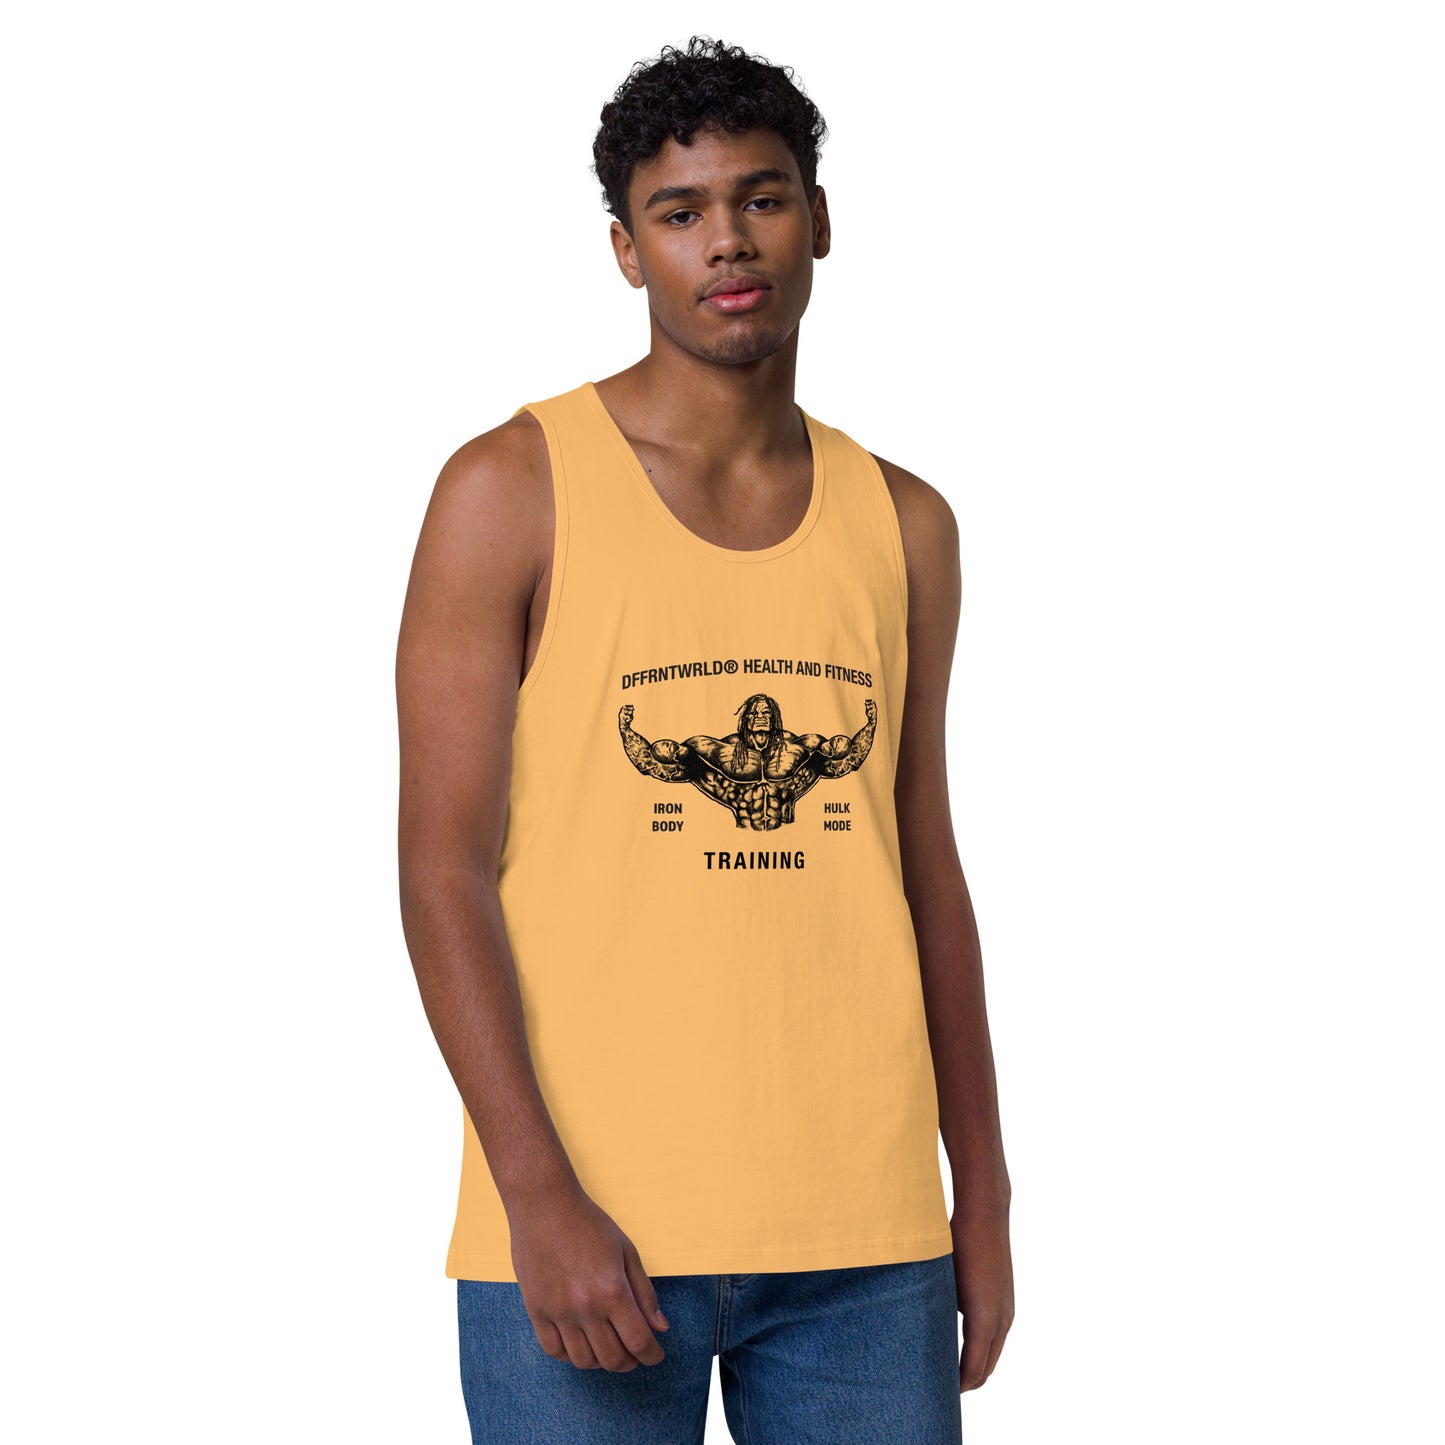 DFFRNTWRLD® Iron Body Gym Shirt